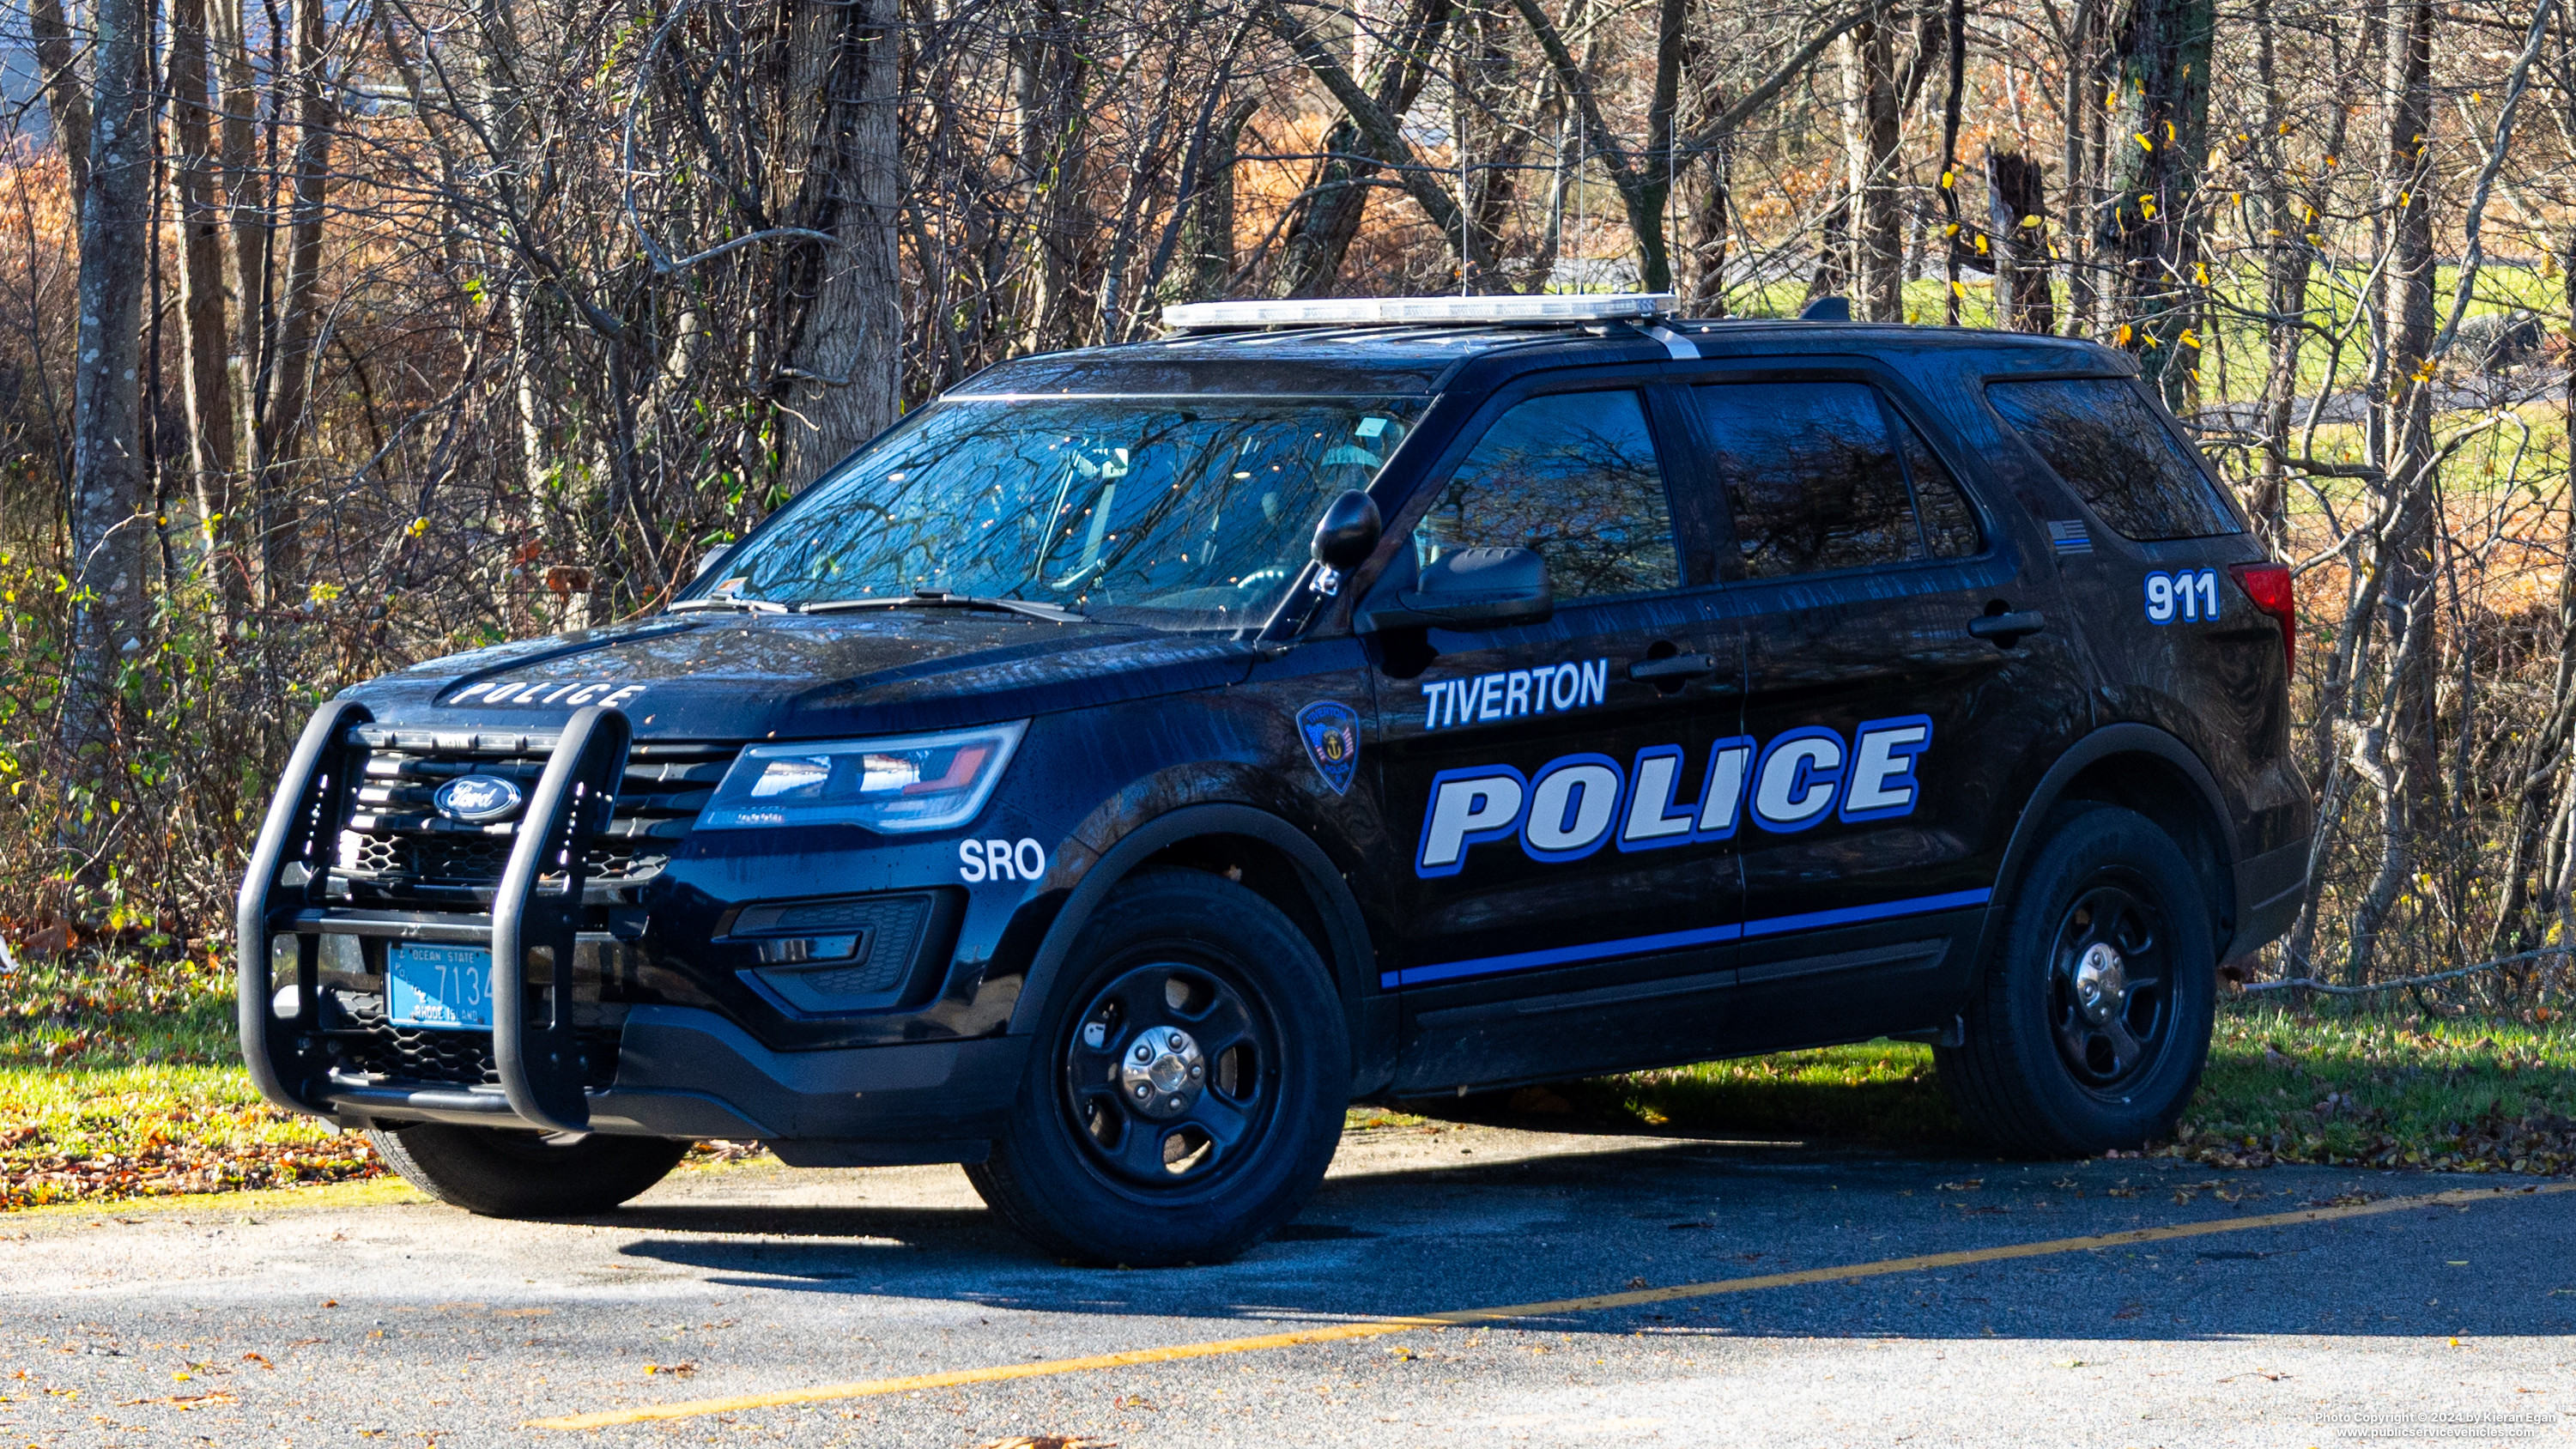 A photo  of Tiverton Police
            Cruiser SRO, a 2019 Ford Police Interceptor Utility             taken by Kieran Egan